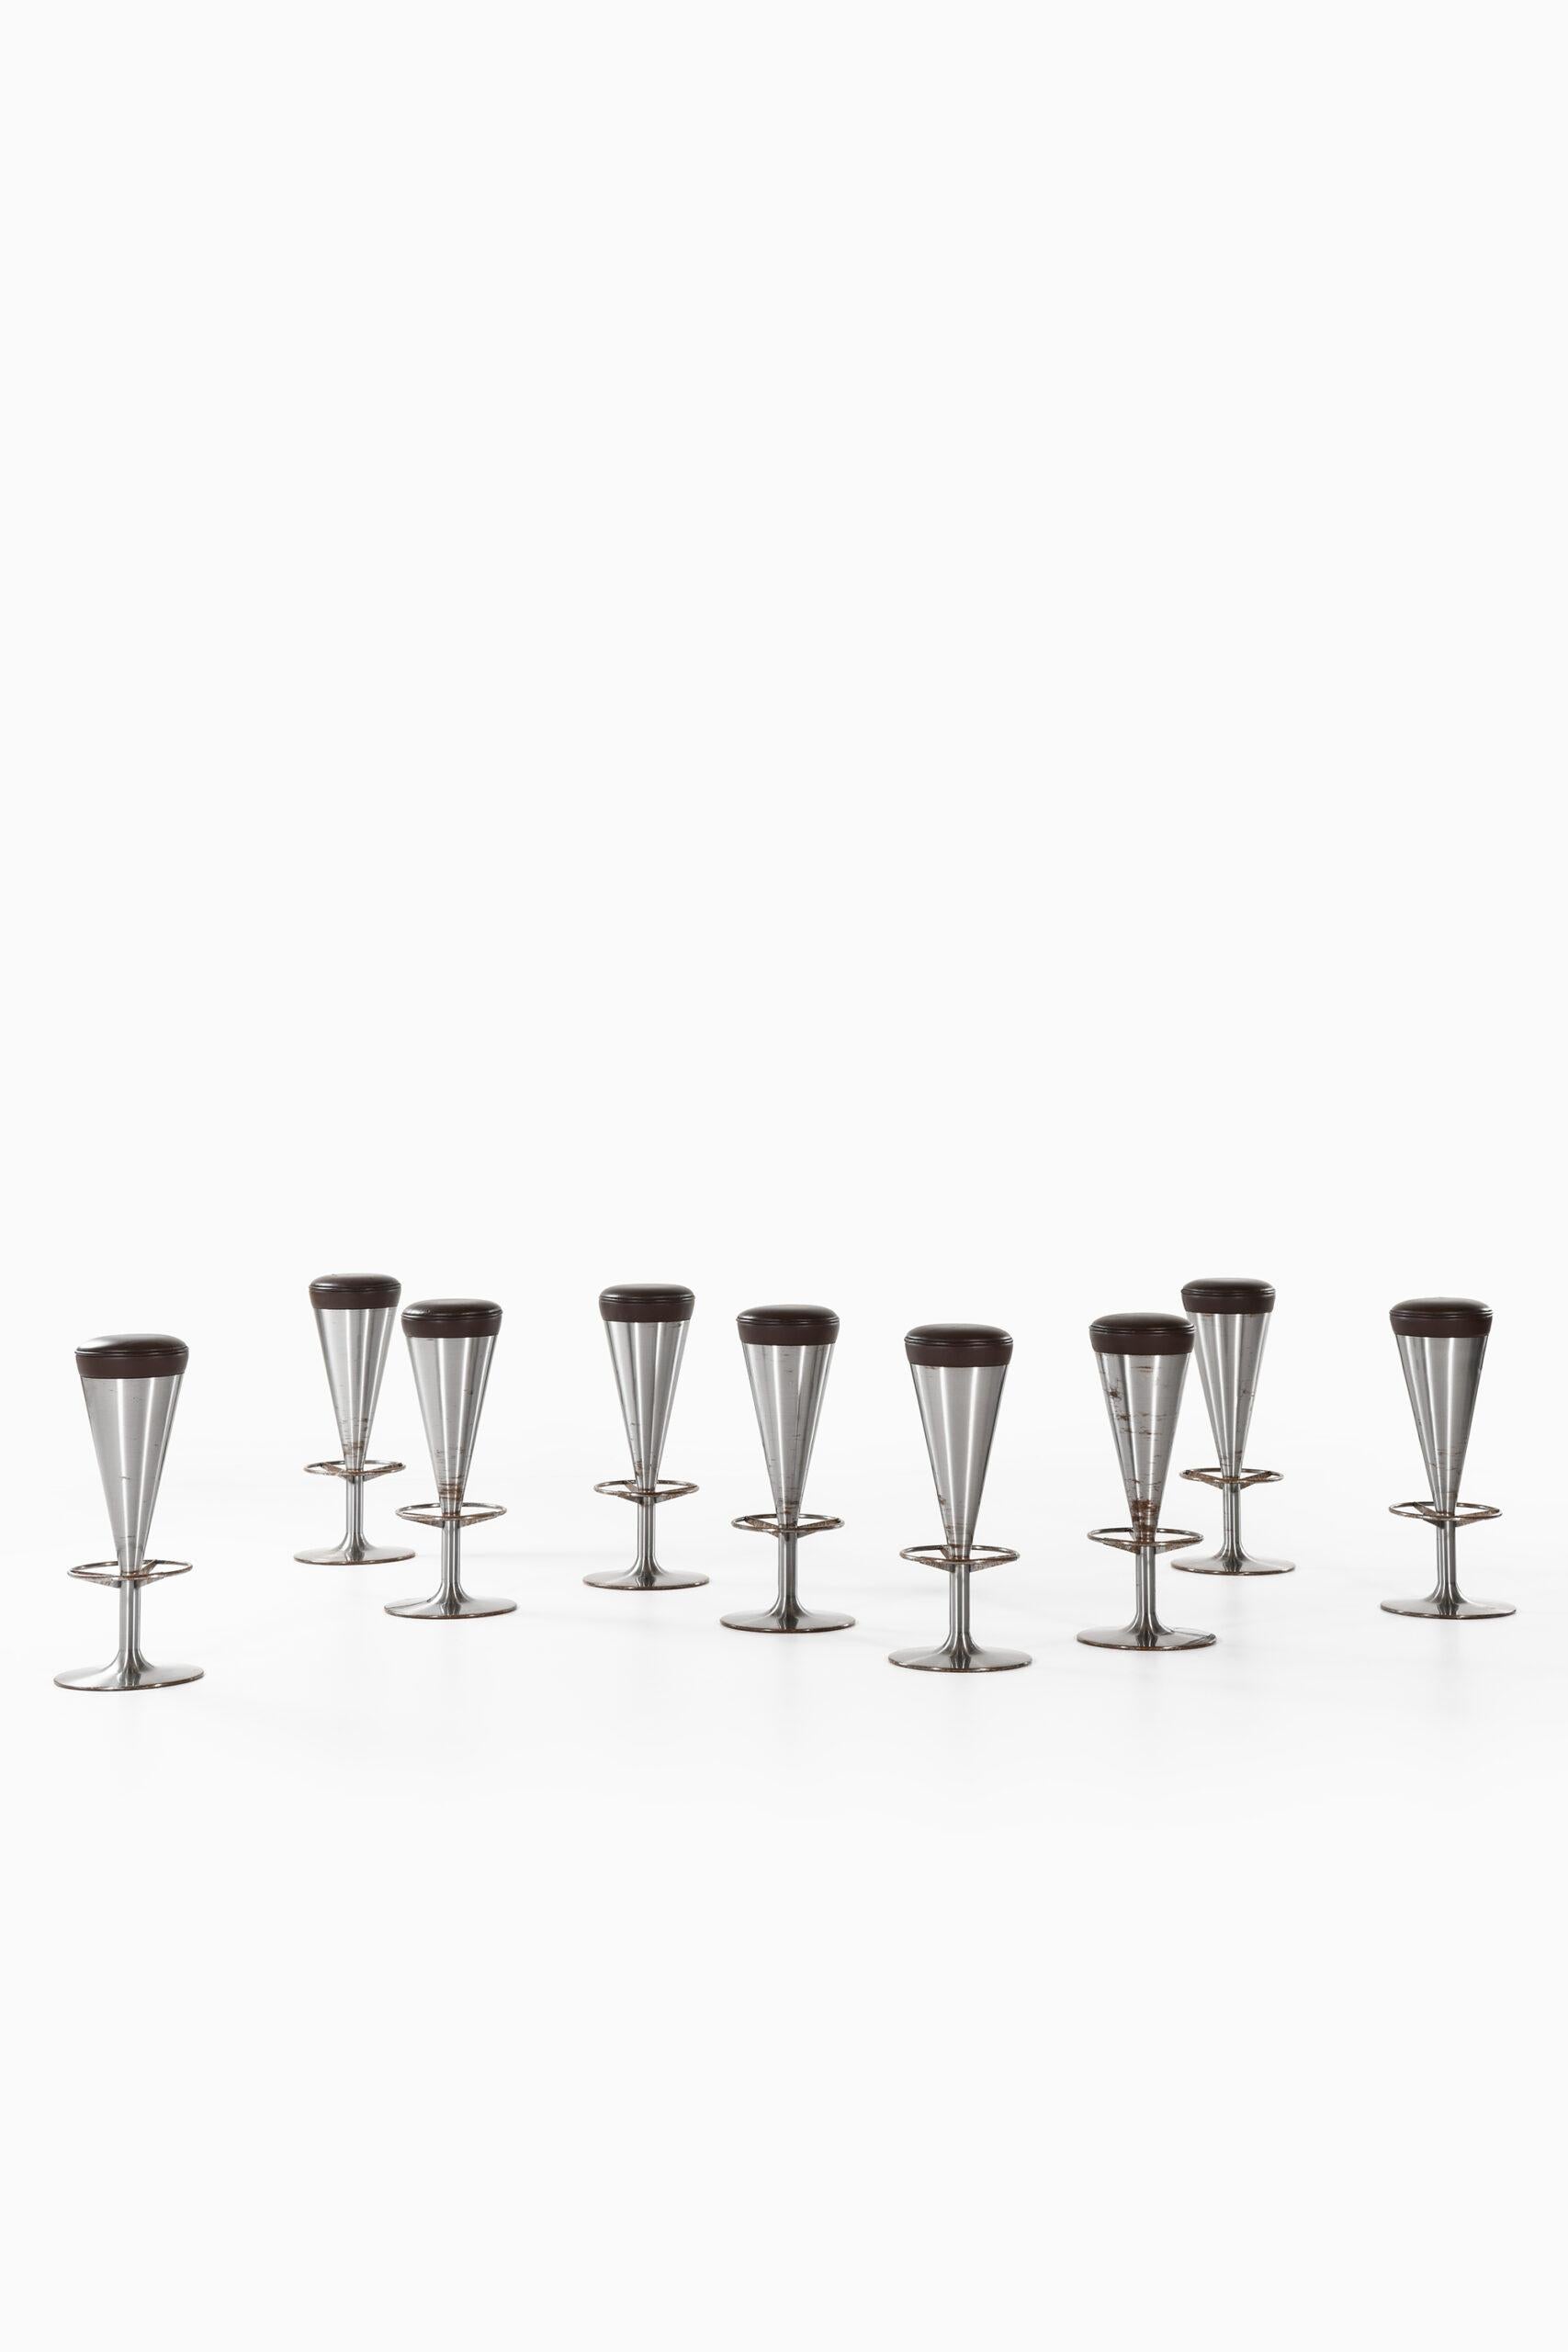 Rare set of 9 bar stools designed by Leo Thafvelin. Produced by Johanson Design in Markaryd, Sweden.